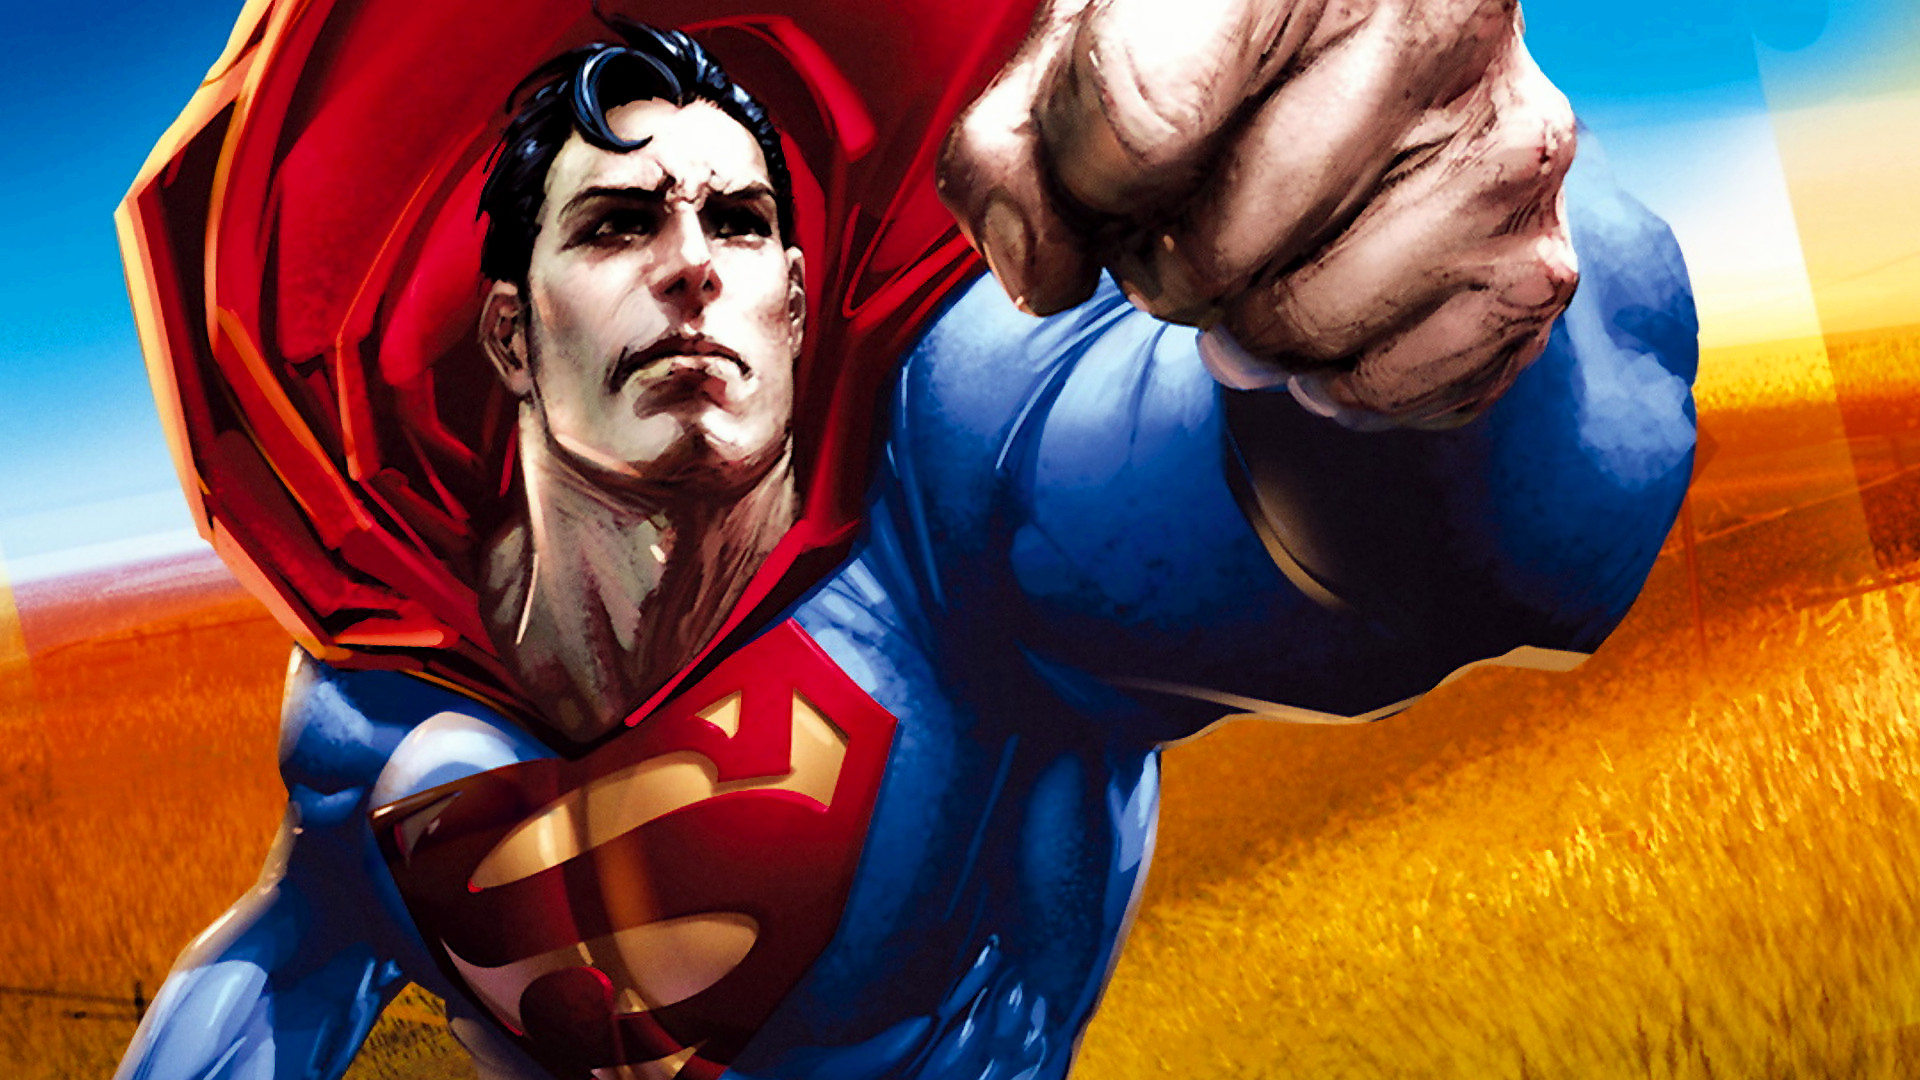 Скачать обои Супермен/бэтмен: Апокалипсис на телефон бесплатно